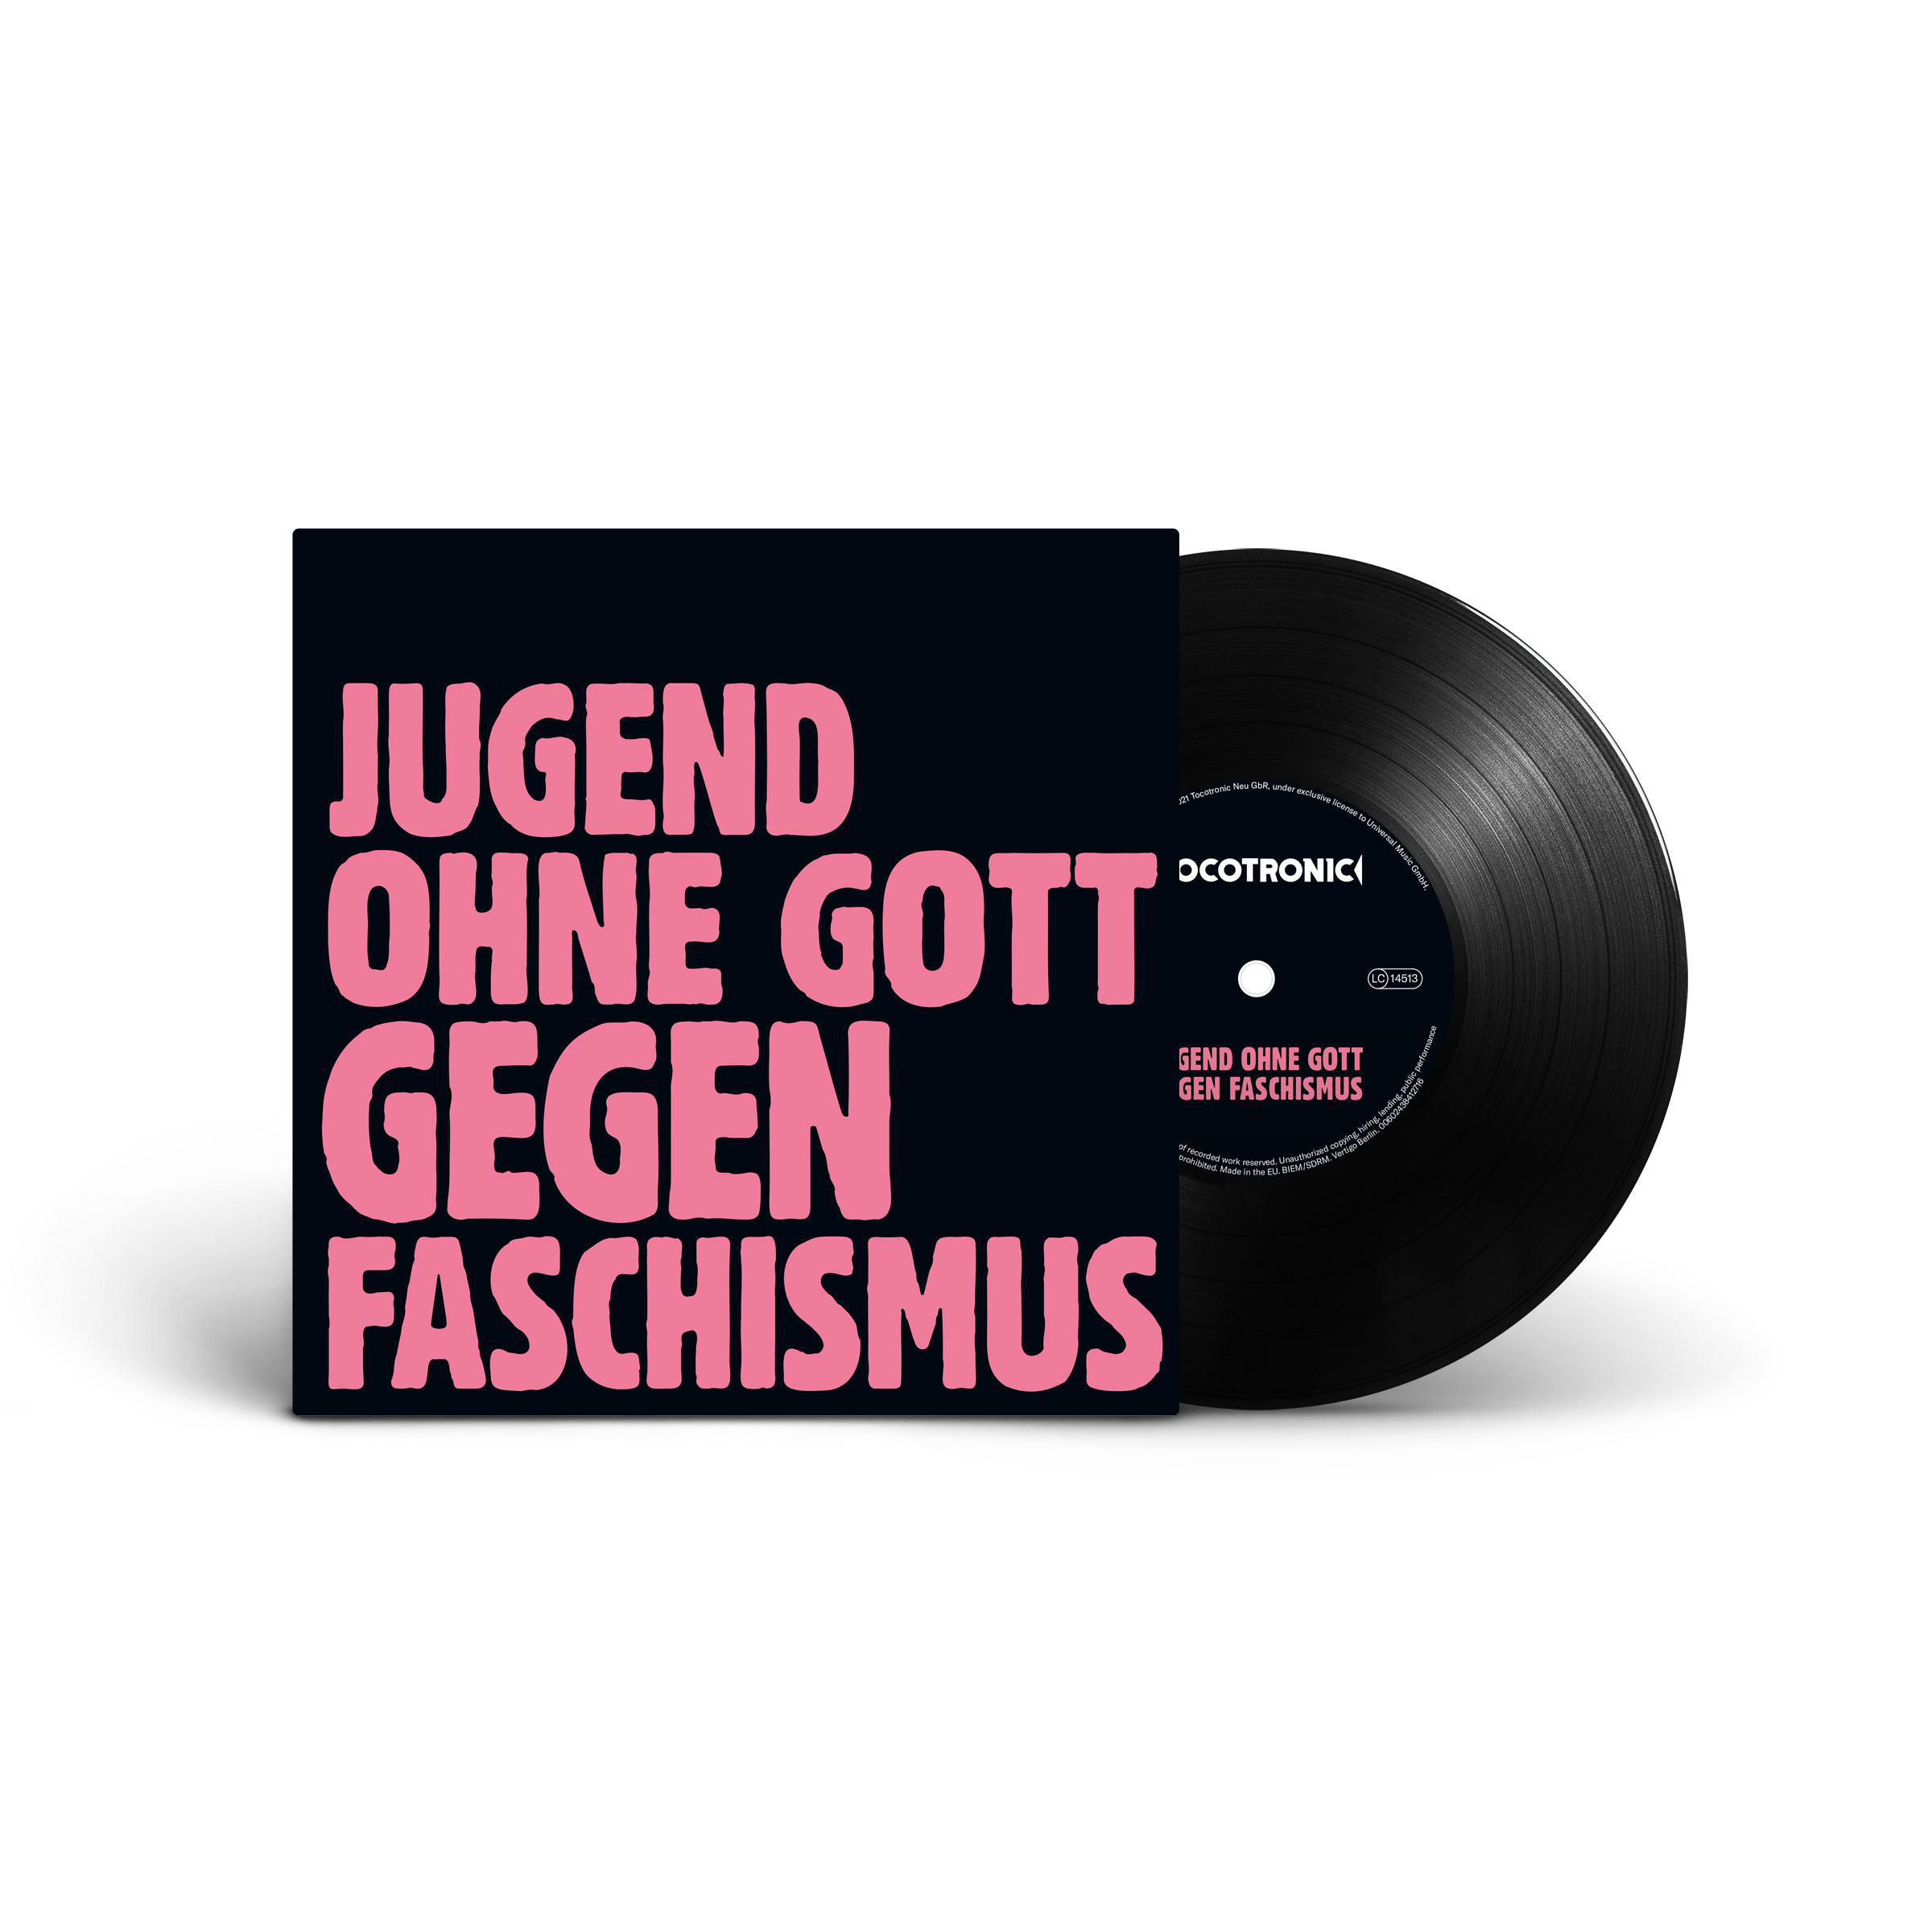 (LTD. - (Vinyl) JUGEND GOTT 7INCH) Tocotronic OHNE - FASCHISMUS GEGEN